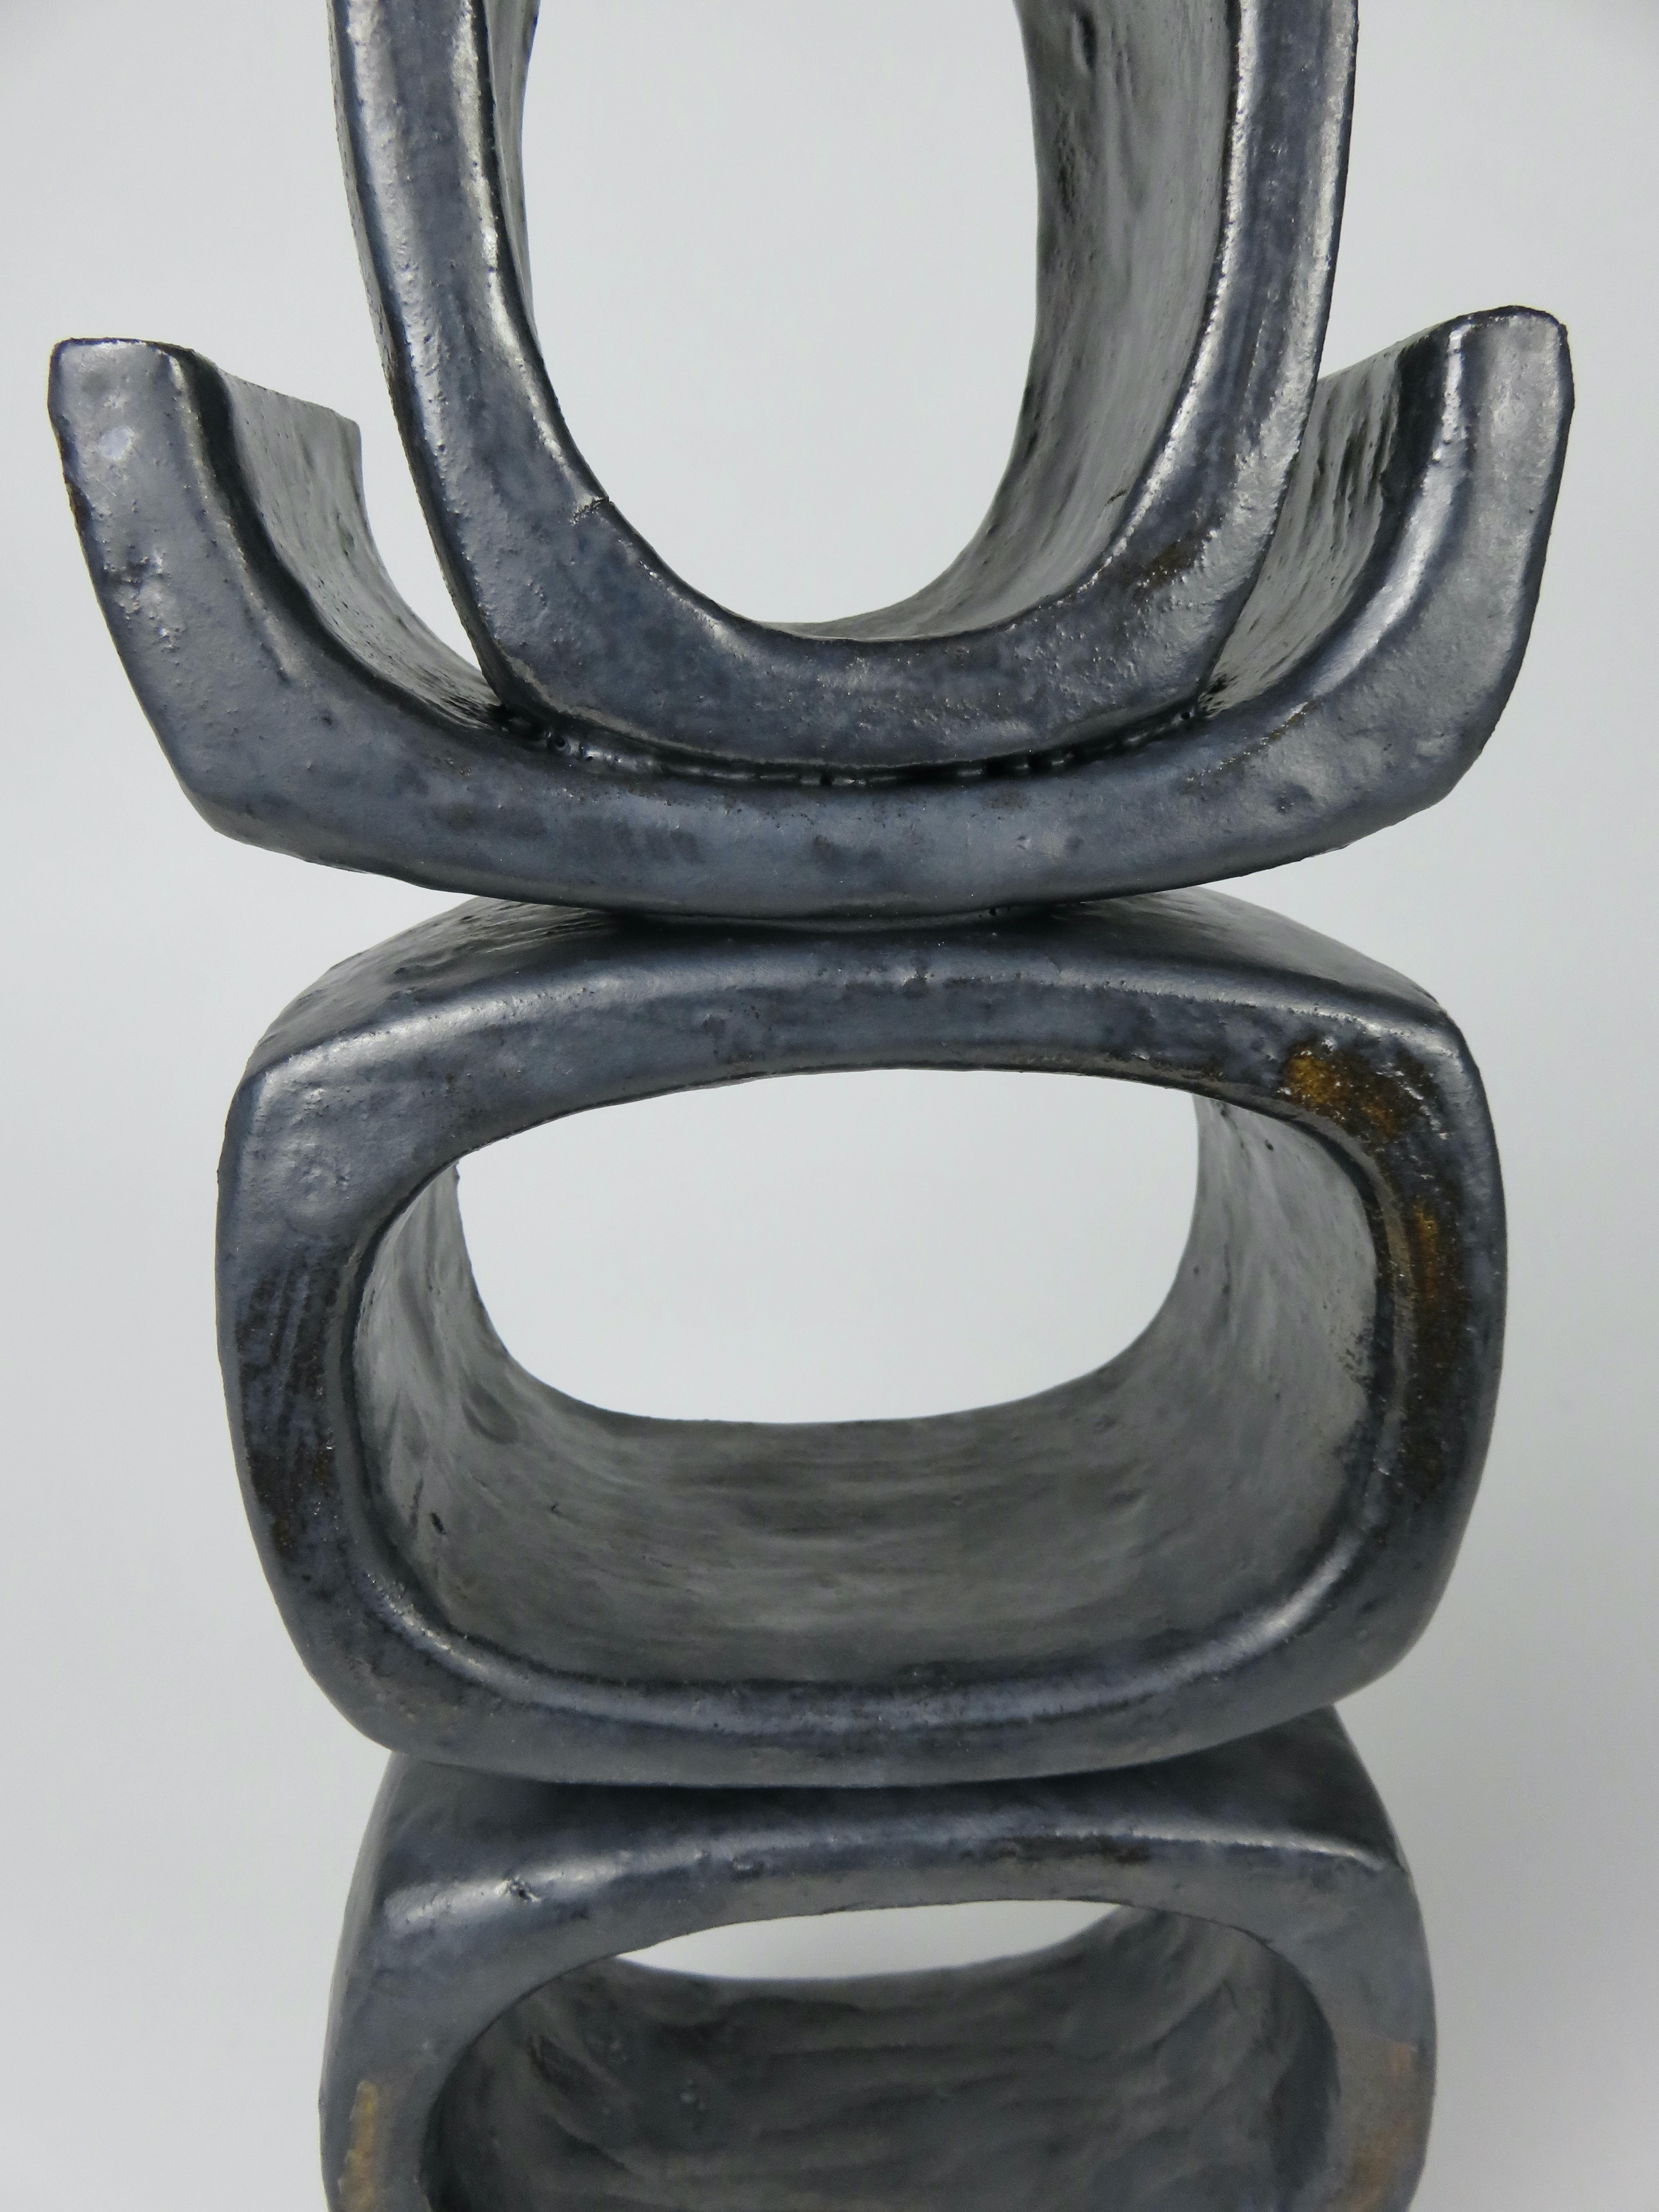 3 Rectangular Ovals, Short Angled Legs, Metallic Black-Glazed Clay Sculpture #1 4